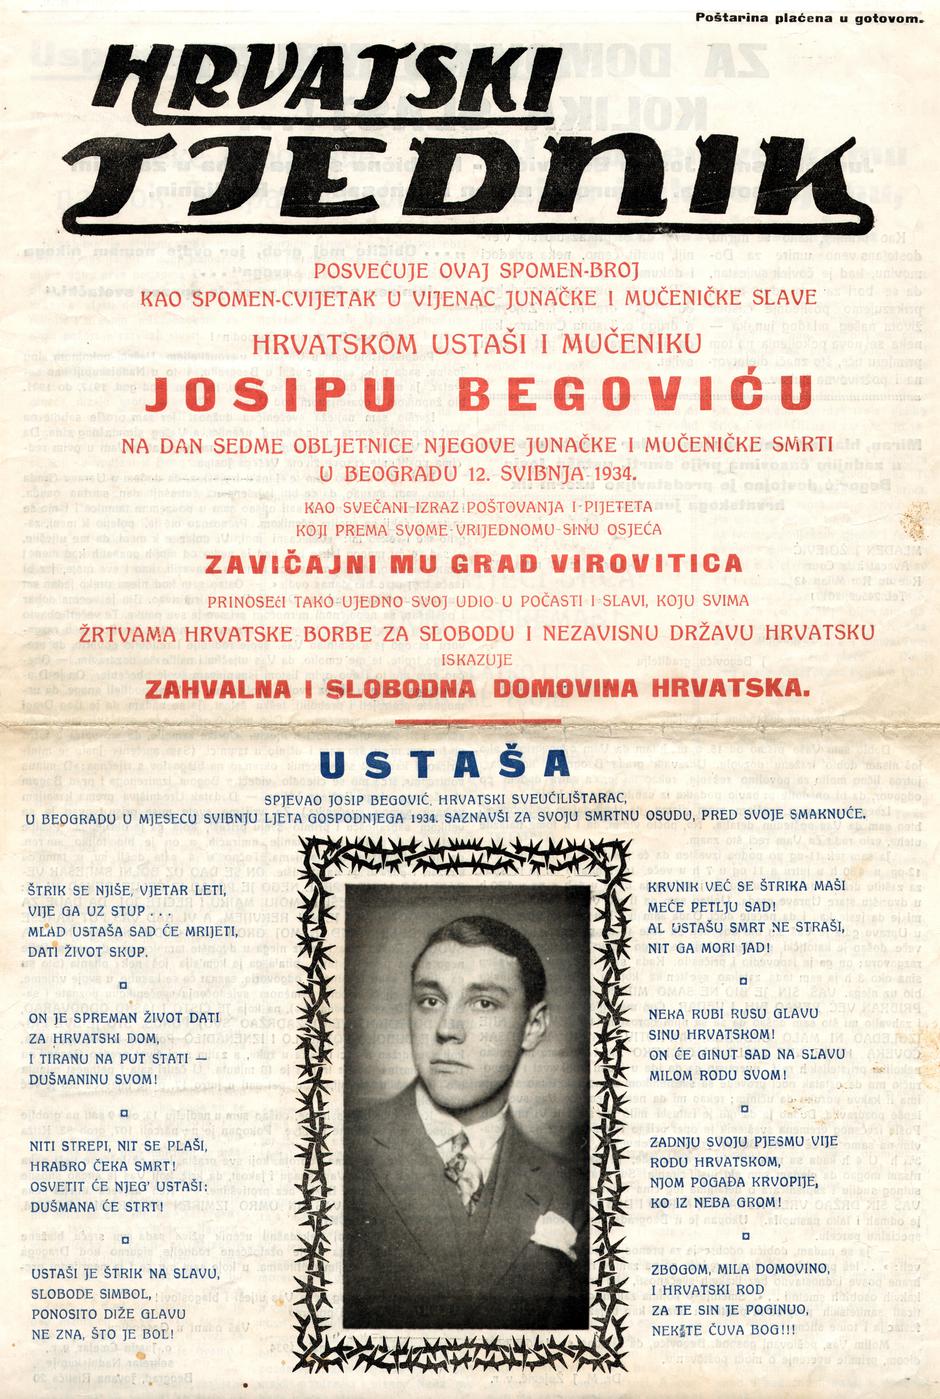 Josip Begović